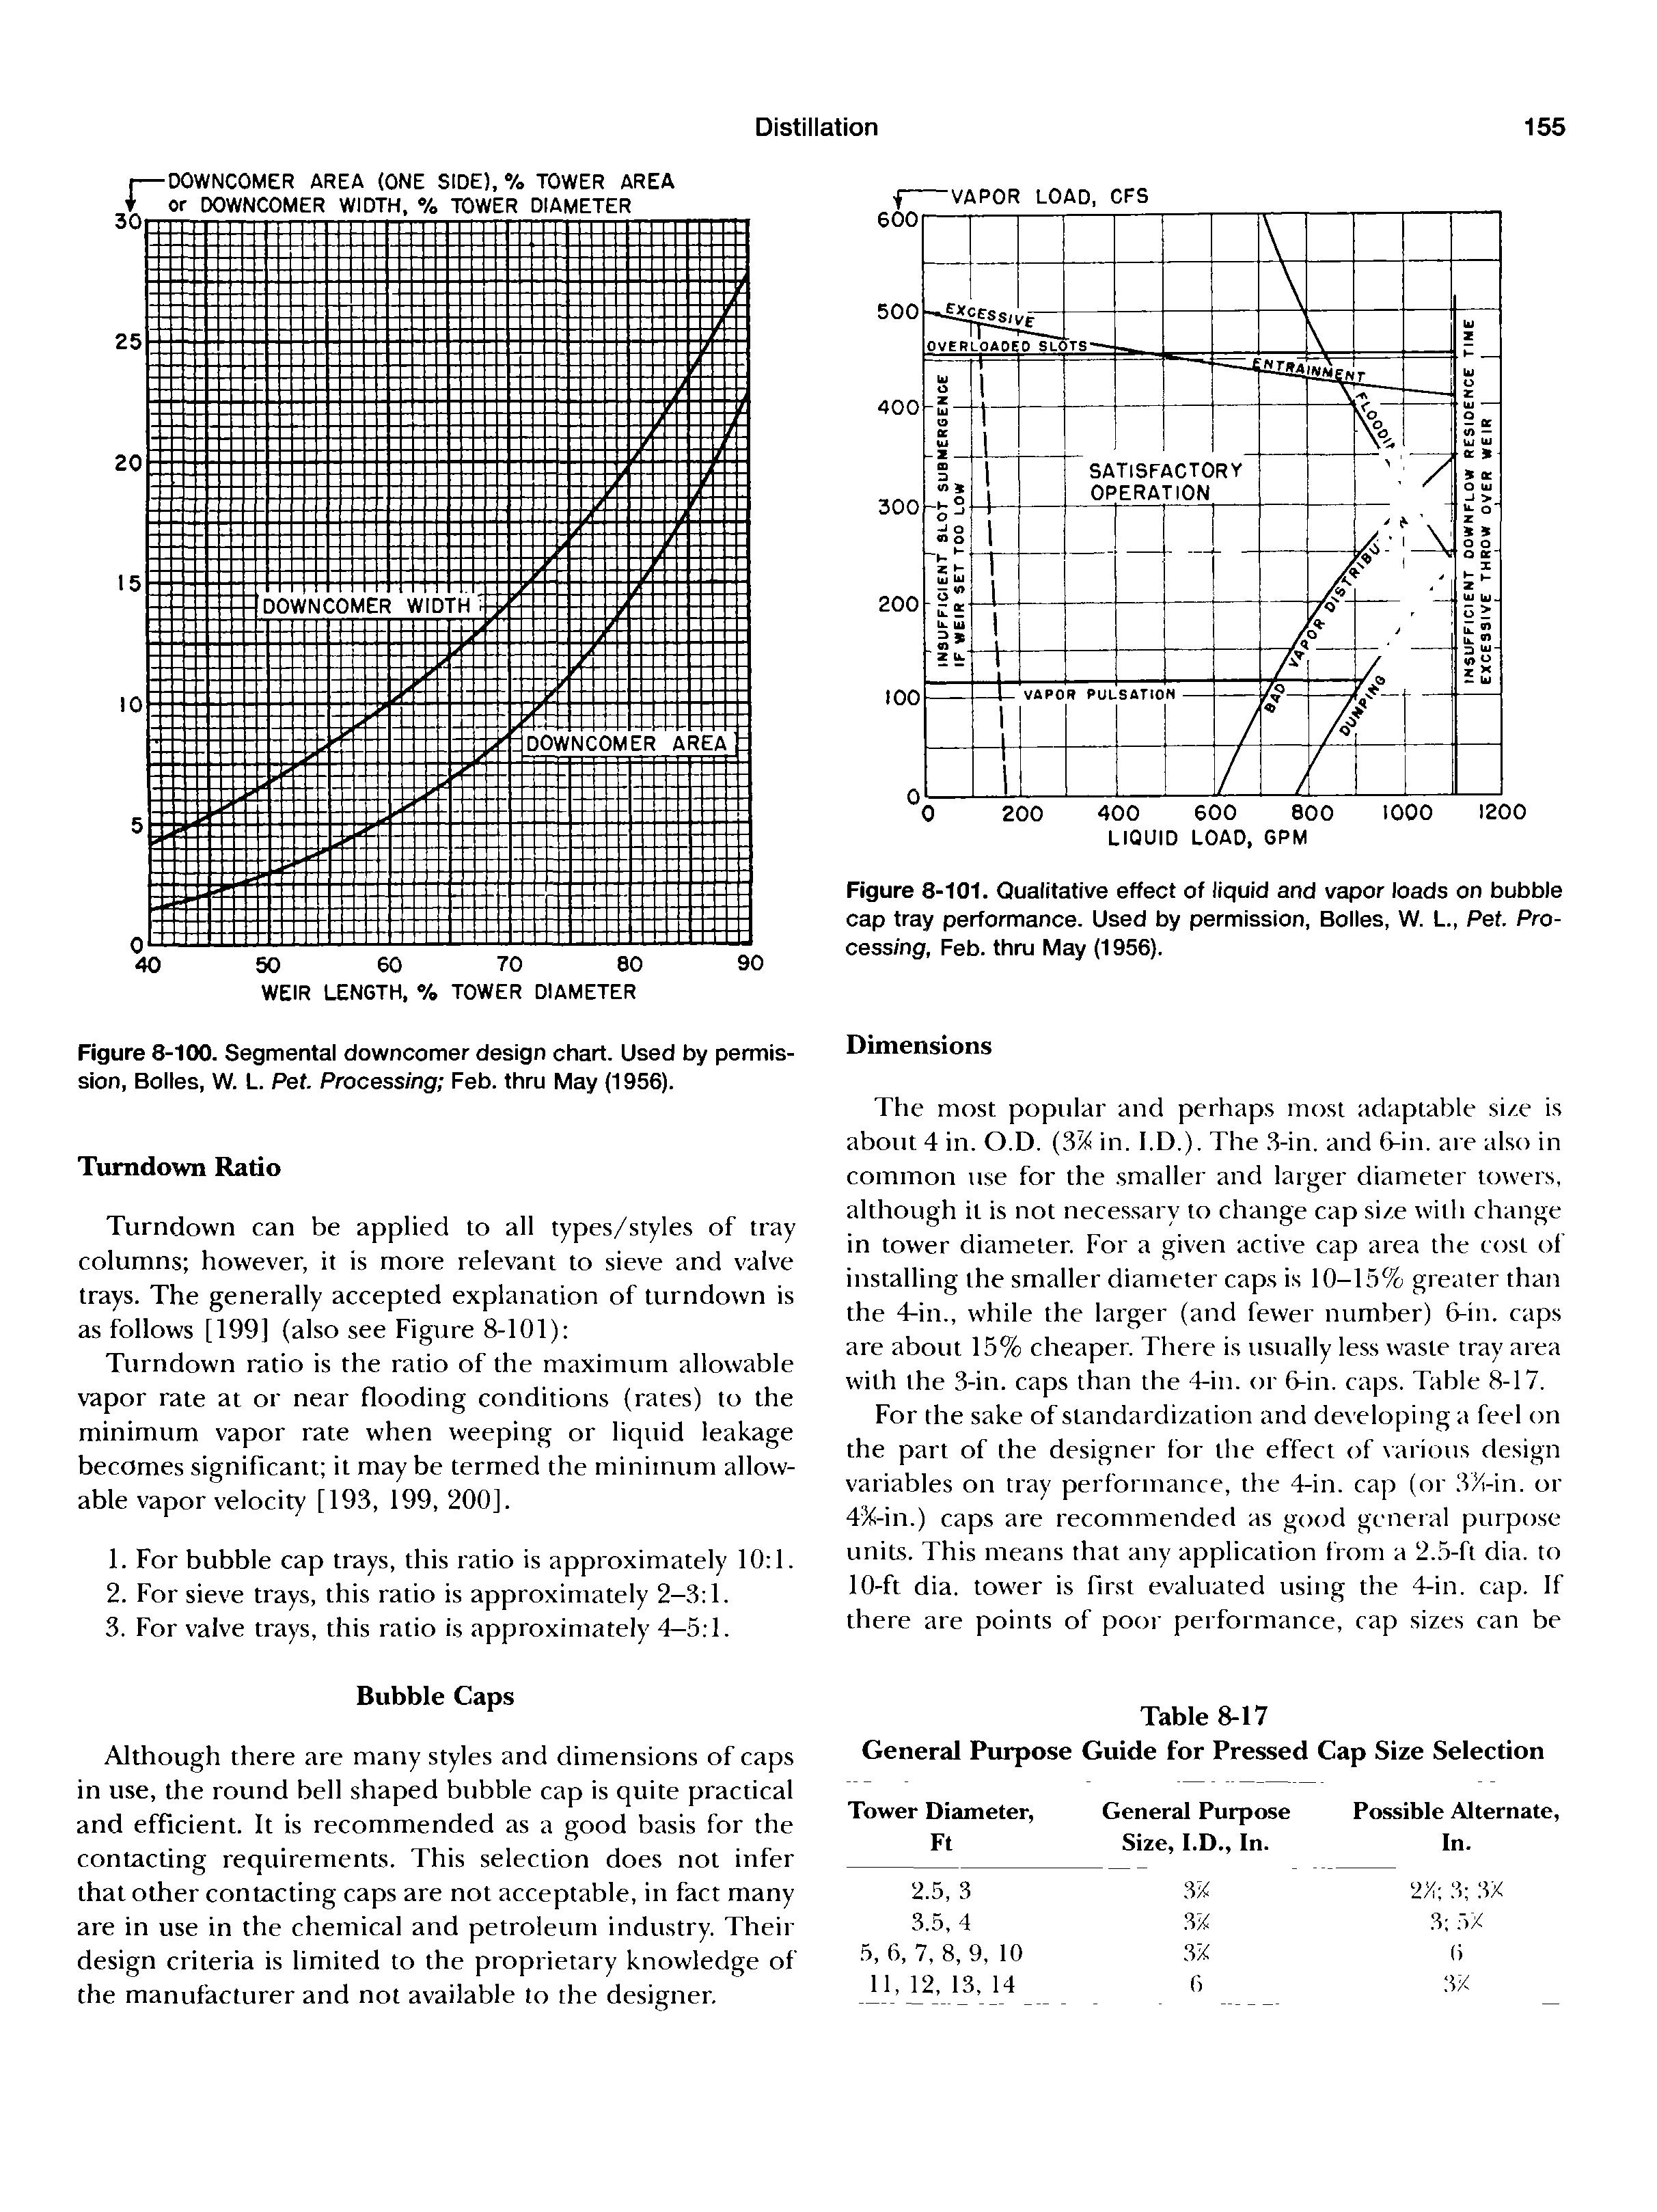 Figure 8-100. Segmental downcomer design chart. Used by permission, Belles, W. L. Pet. Processing Feb. thru May (1956).